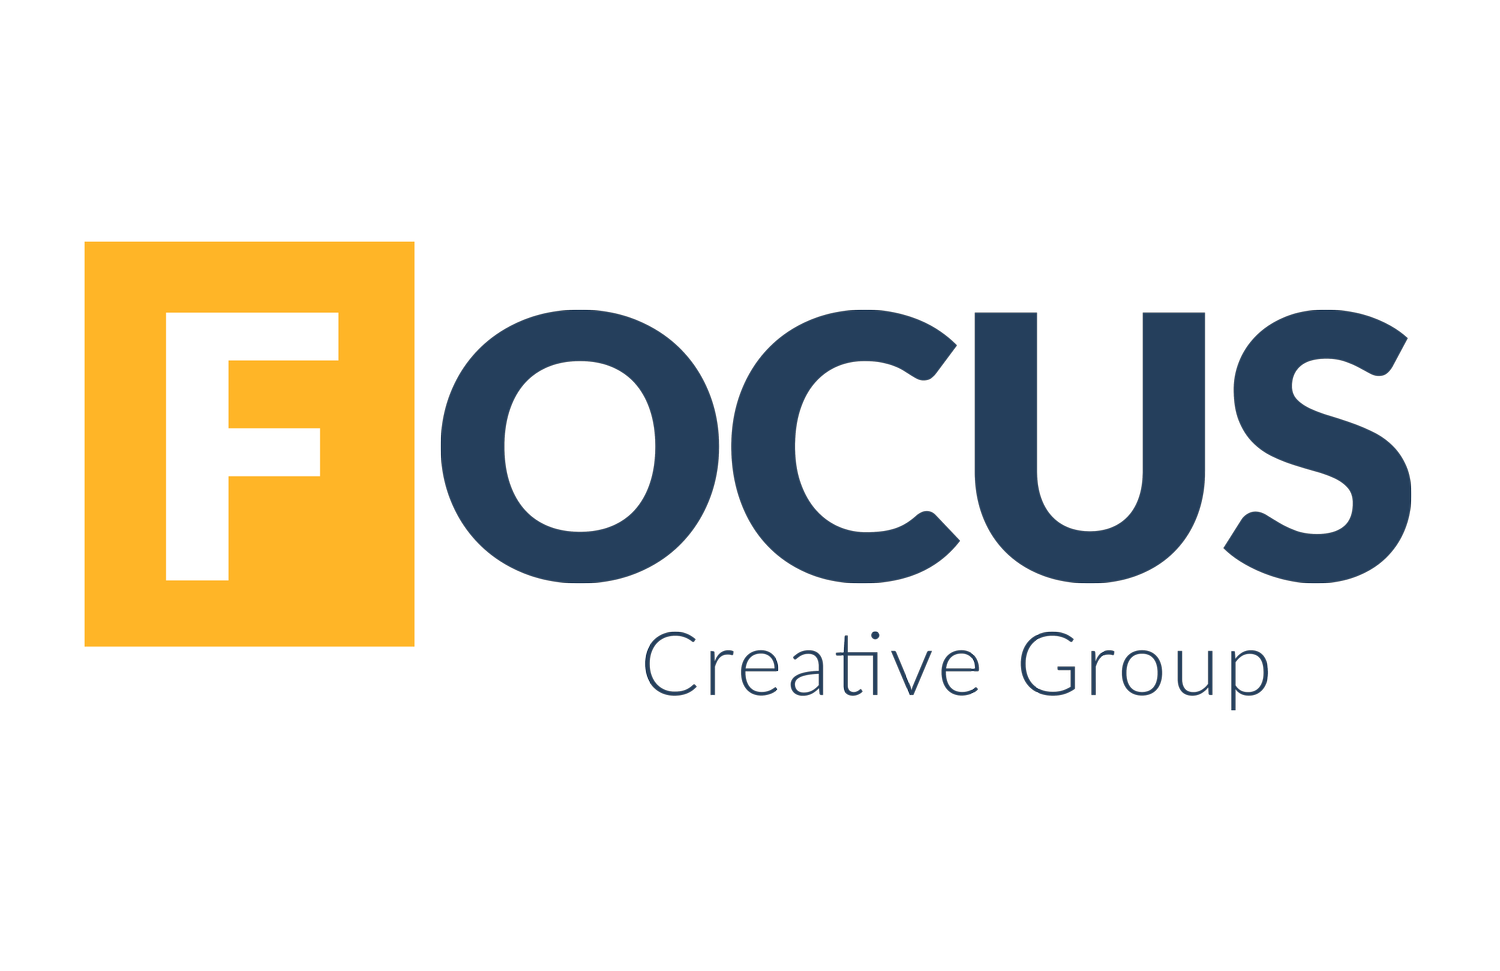 Focus Creative Group